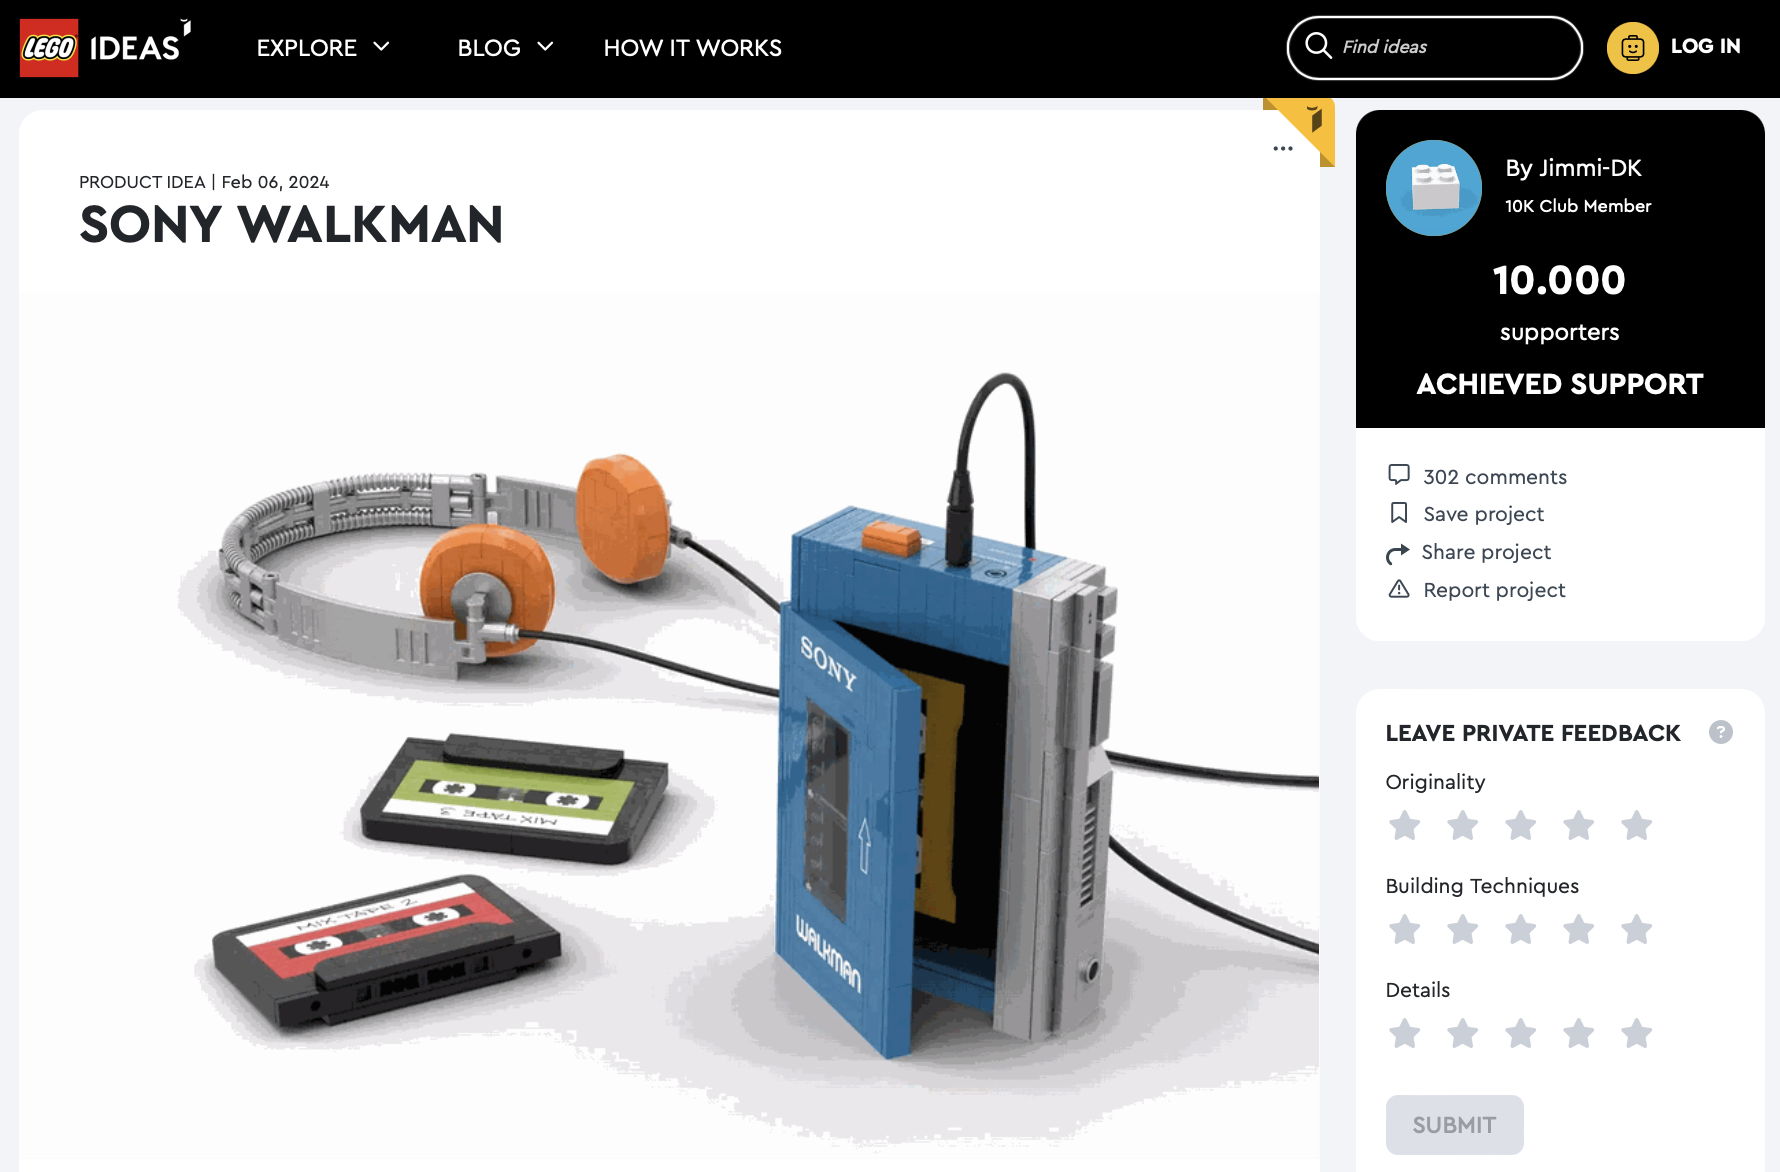 Sony Walkman raggiunge i 10k su LEGO Ideas